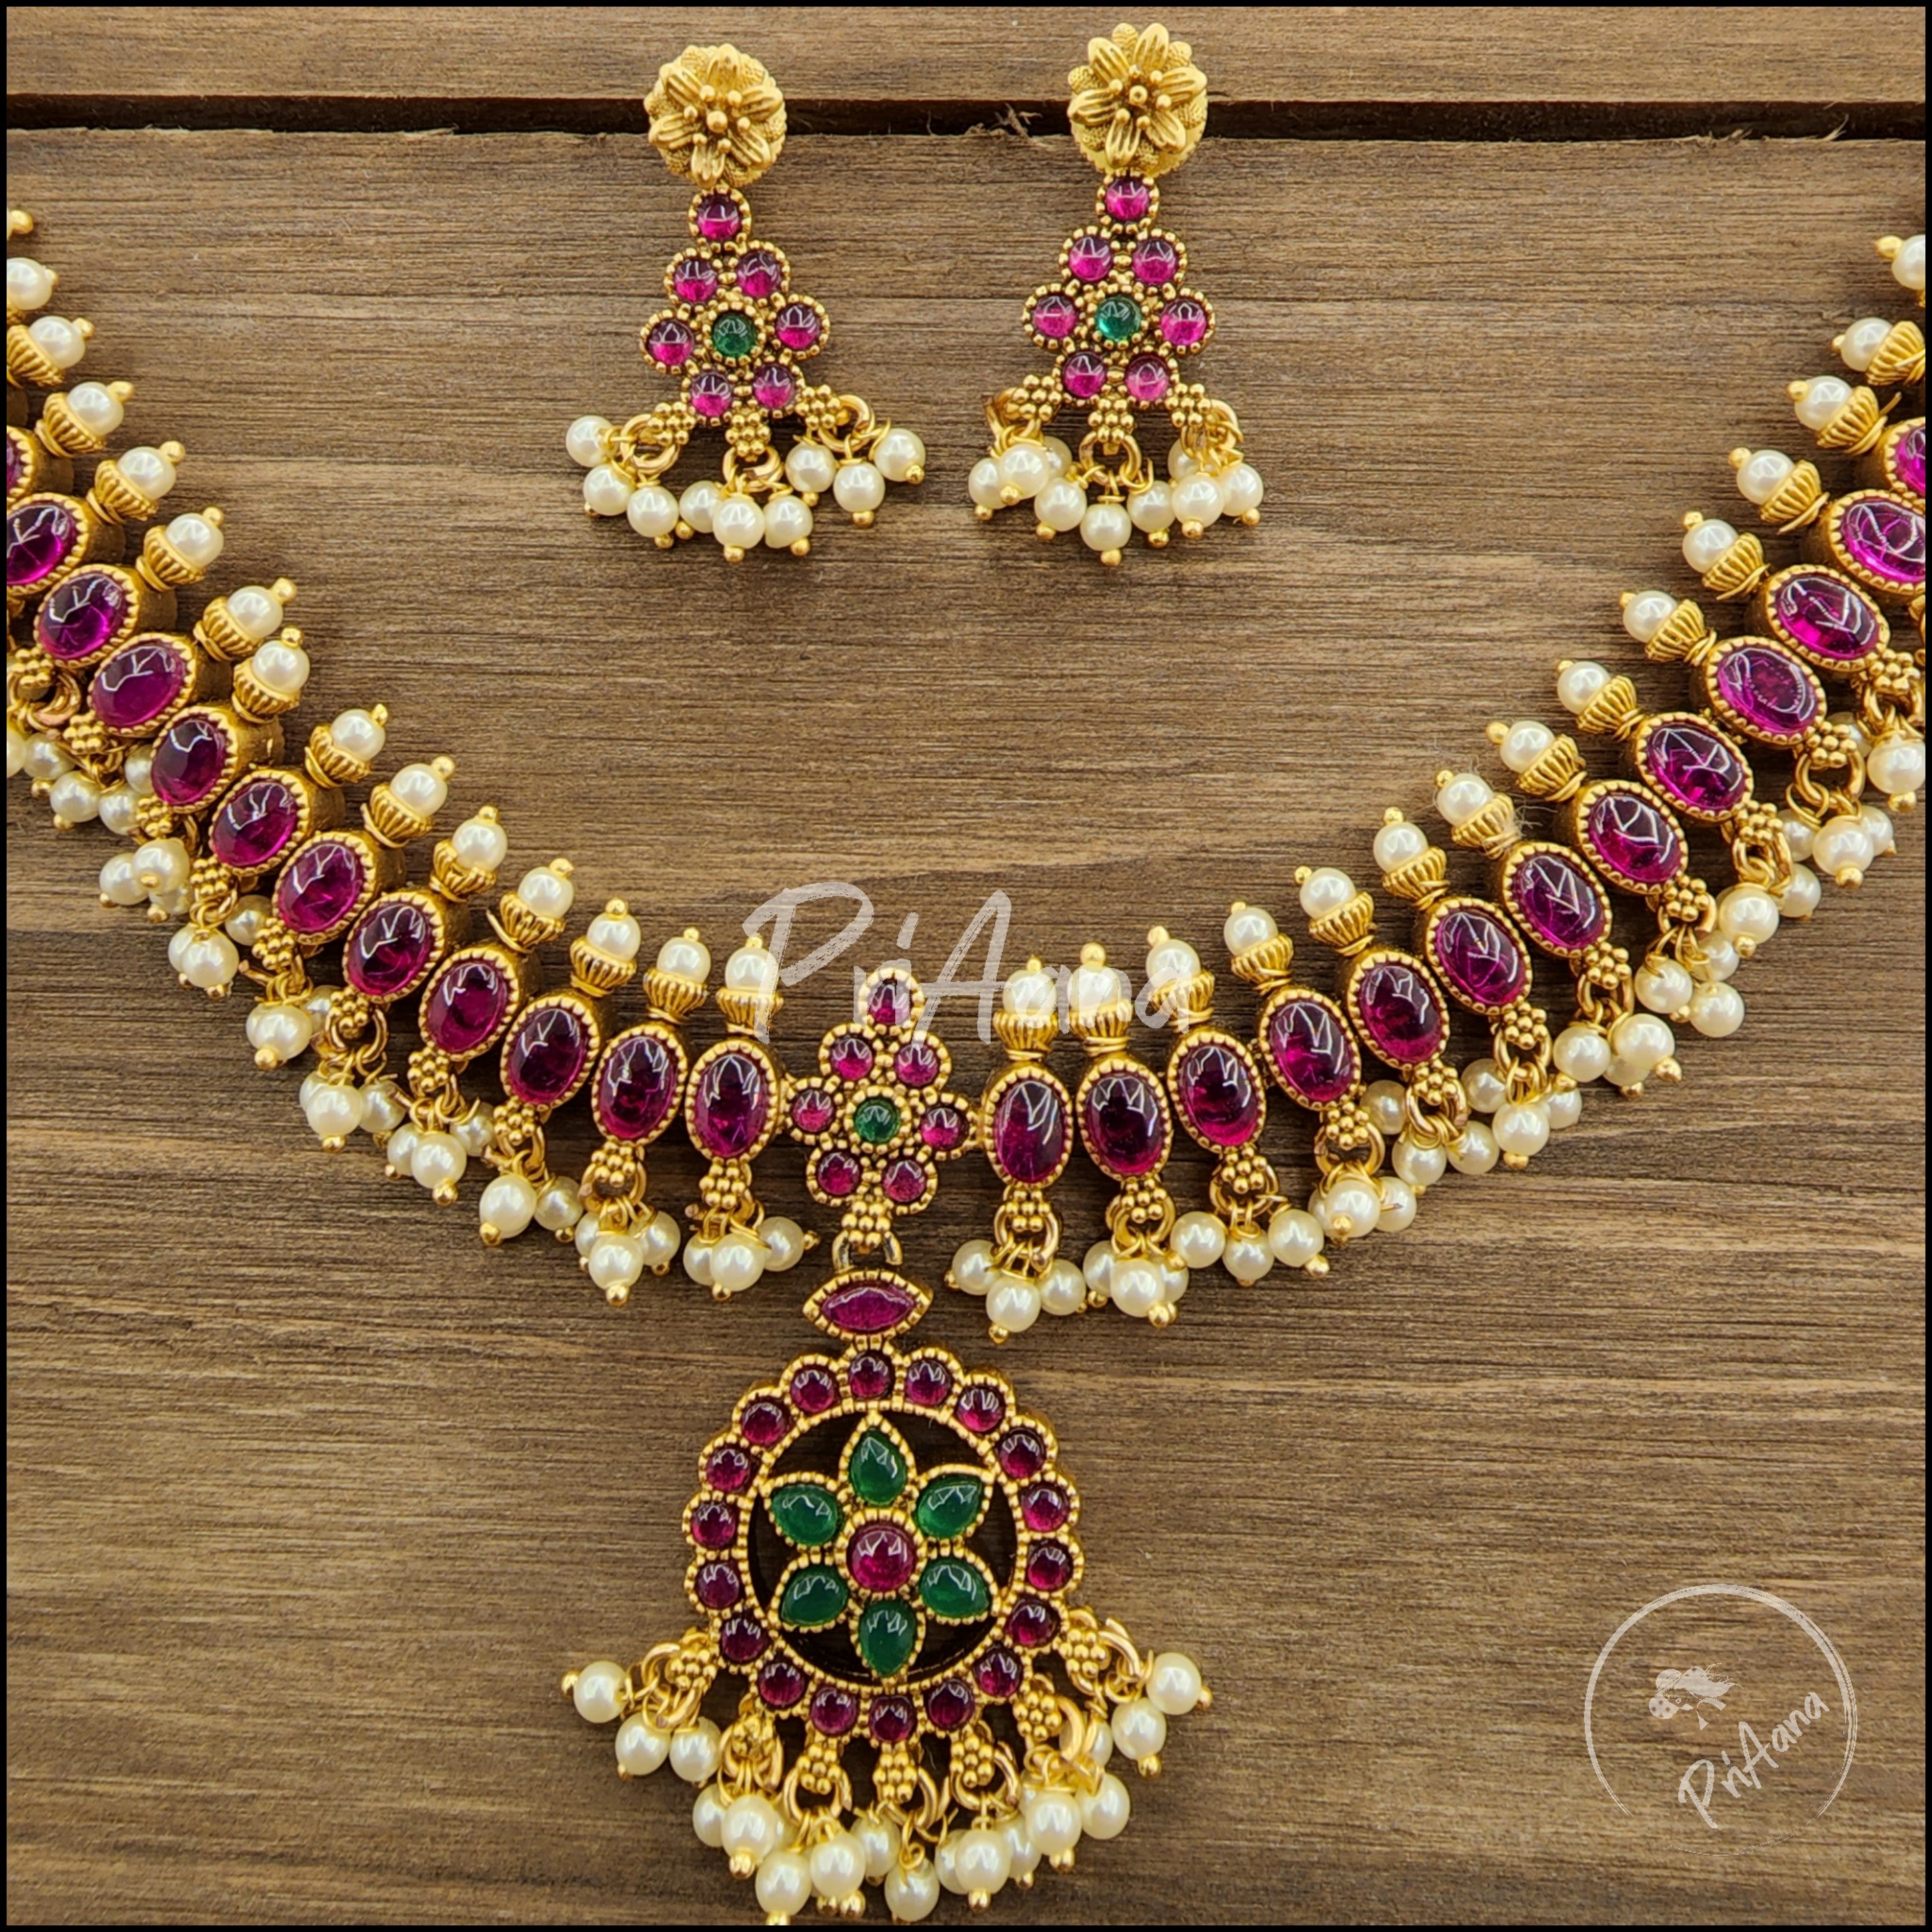 Devahuti Temple Jewelry Kemp Stone Necklace Set (Reversible)